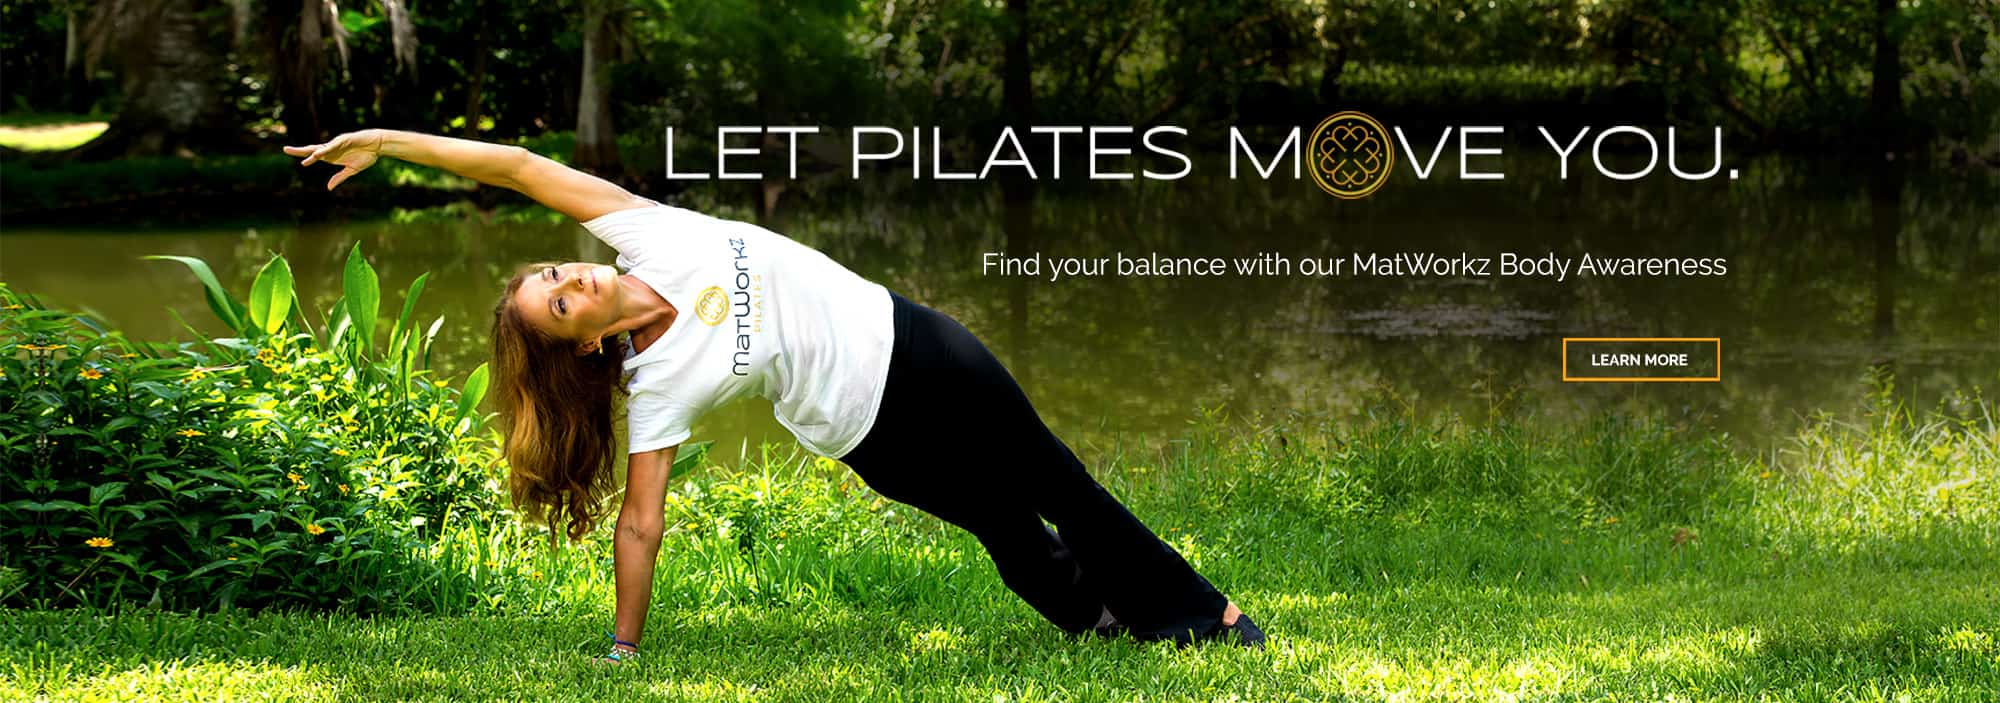 Let Pilates Move You